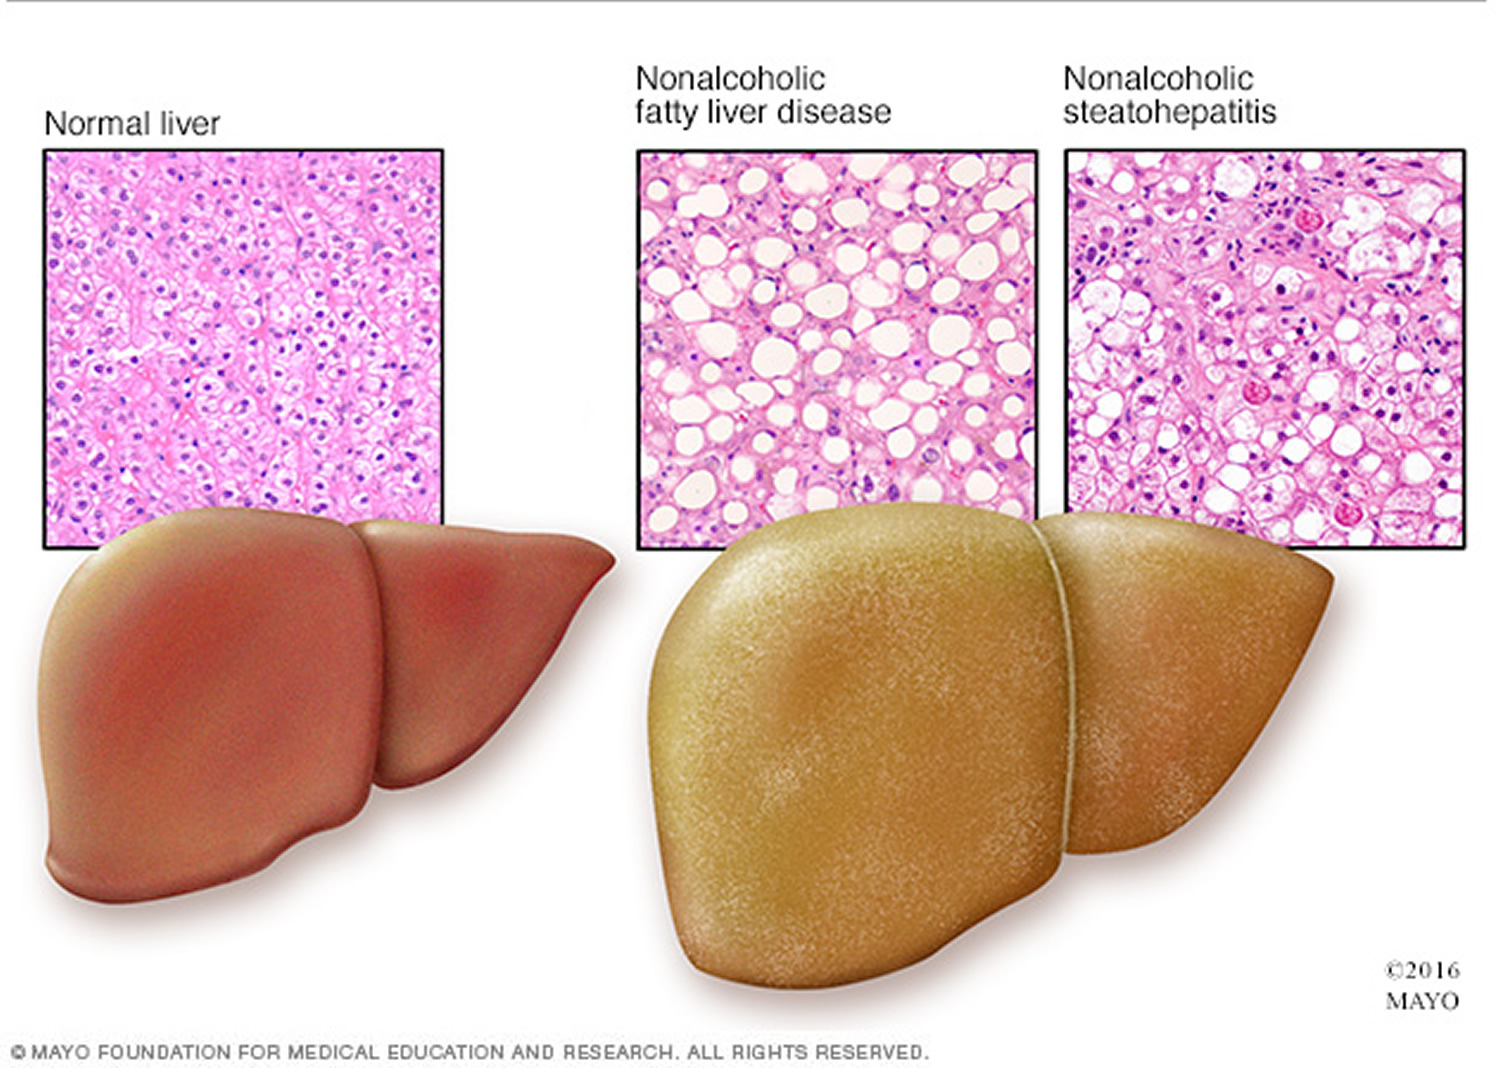 fatty liver and non-alcoholic fatty liver disease